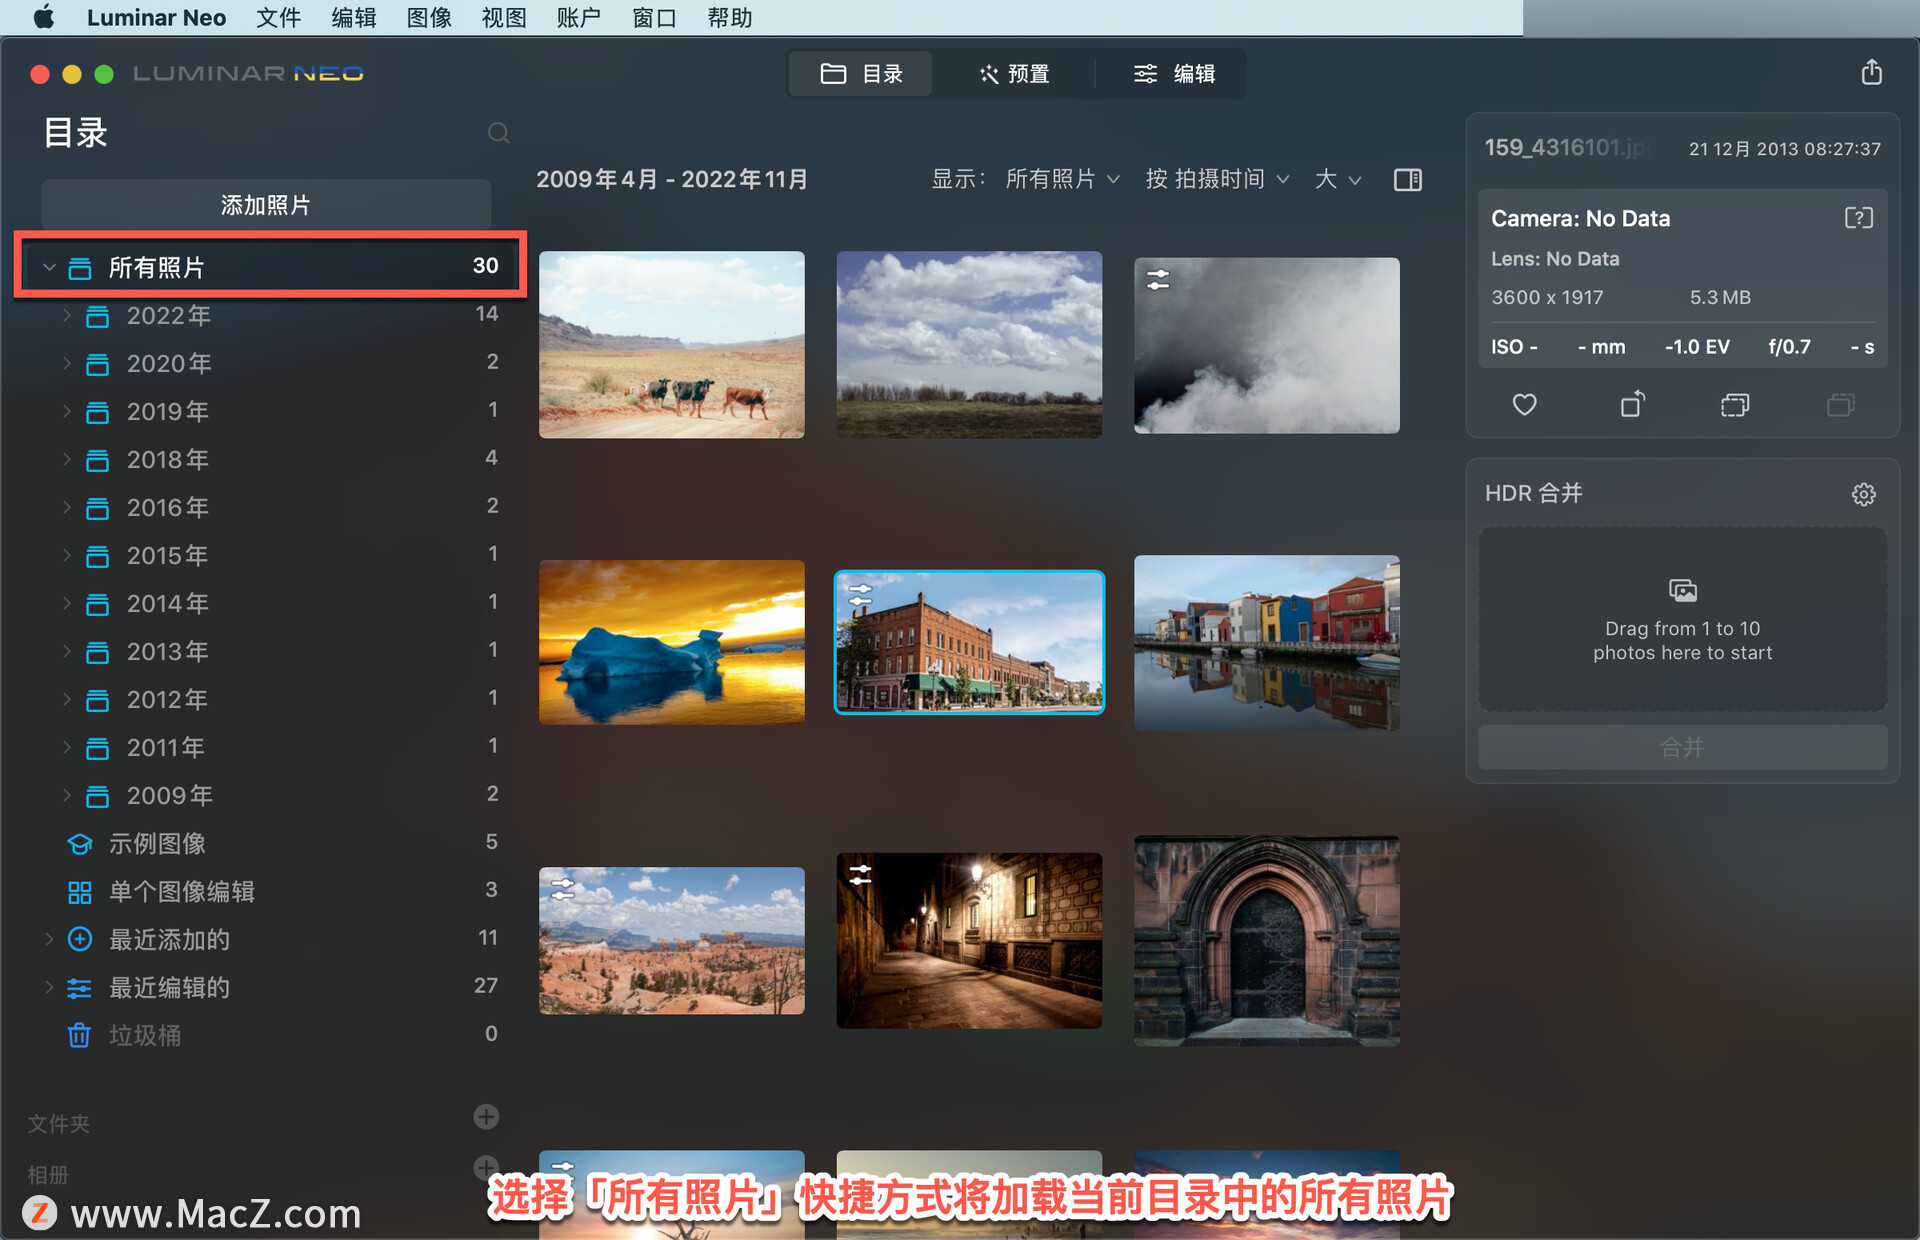 Luminar Neo 教程「48」，如何在 Luminar Neo 中使用快捷方式查找照片？